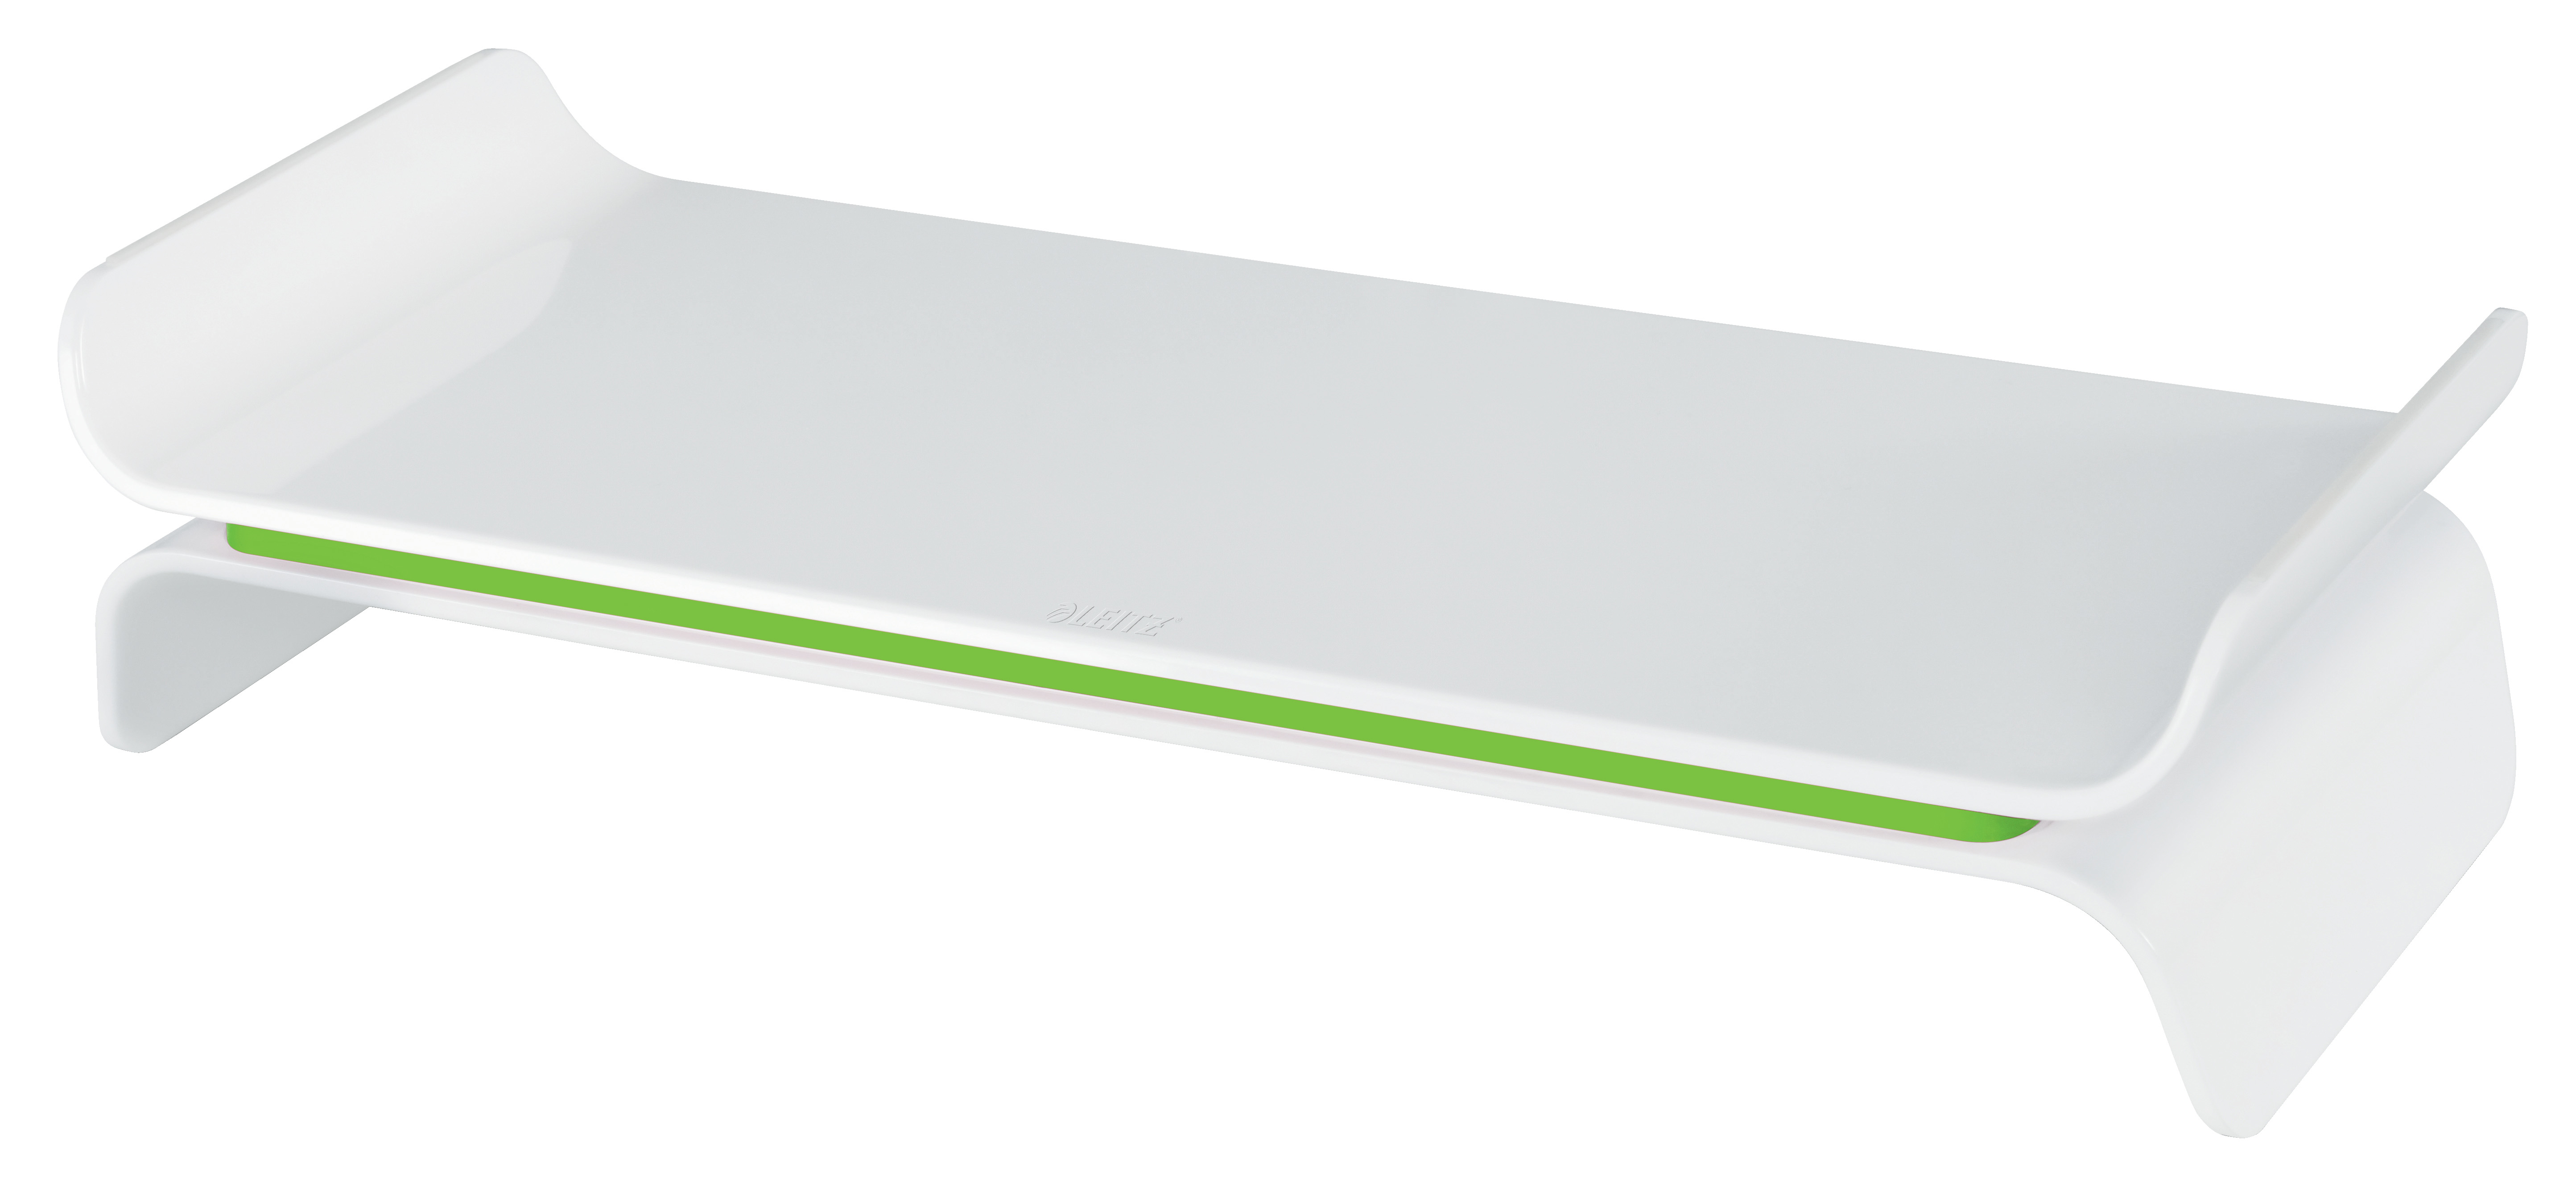 LEITZ Support monitor WOW 6504-00-54 blanc/vert blanc/vert